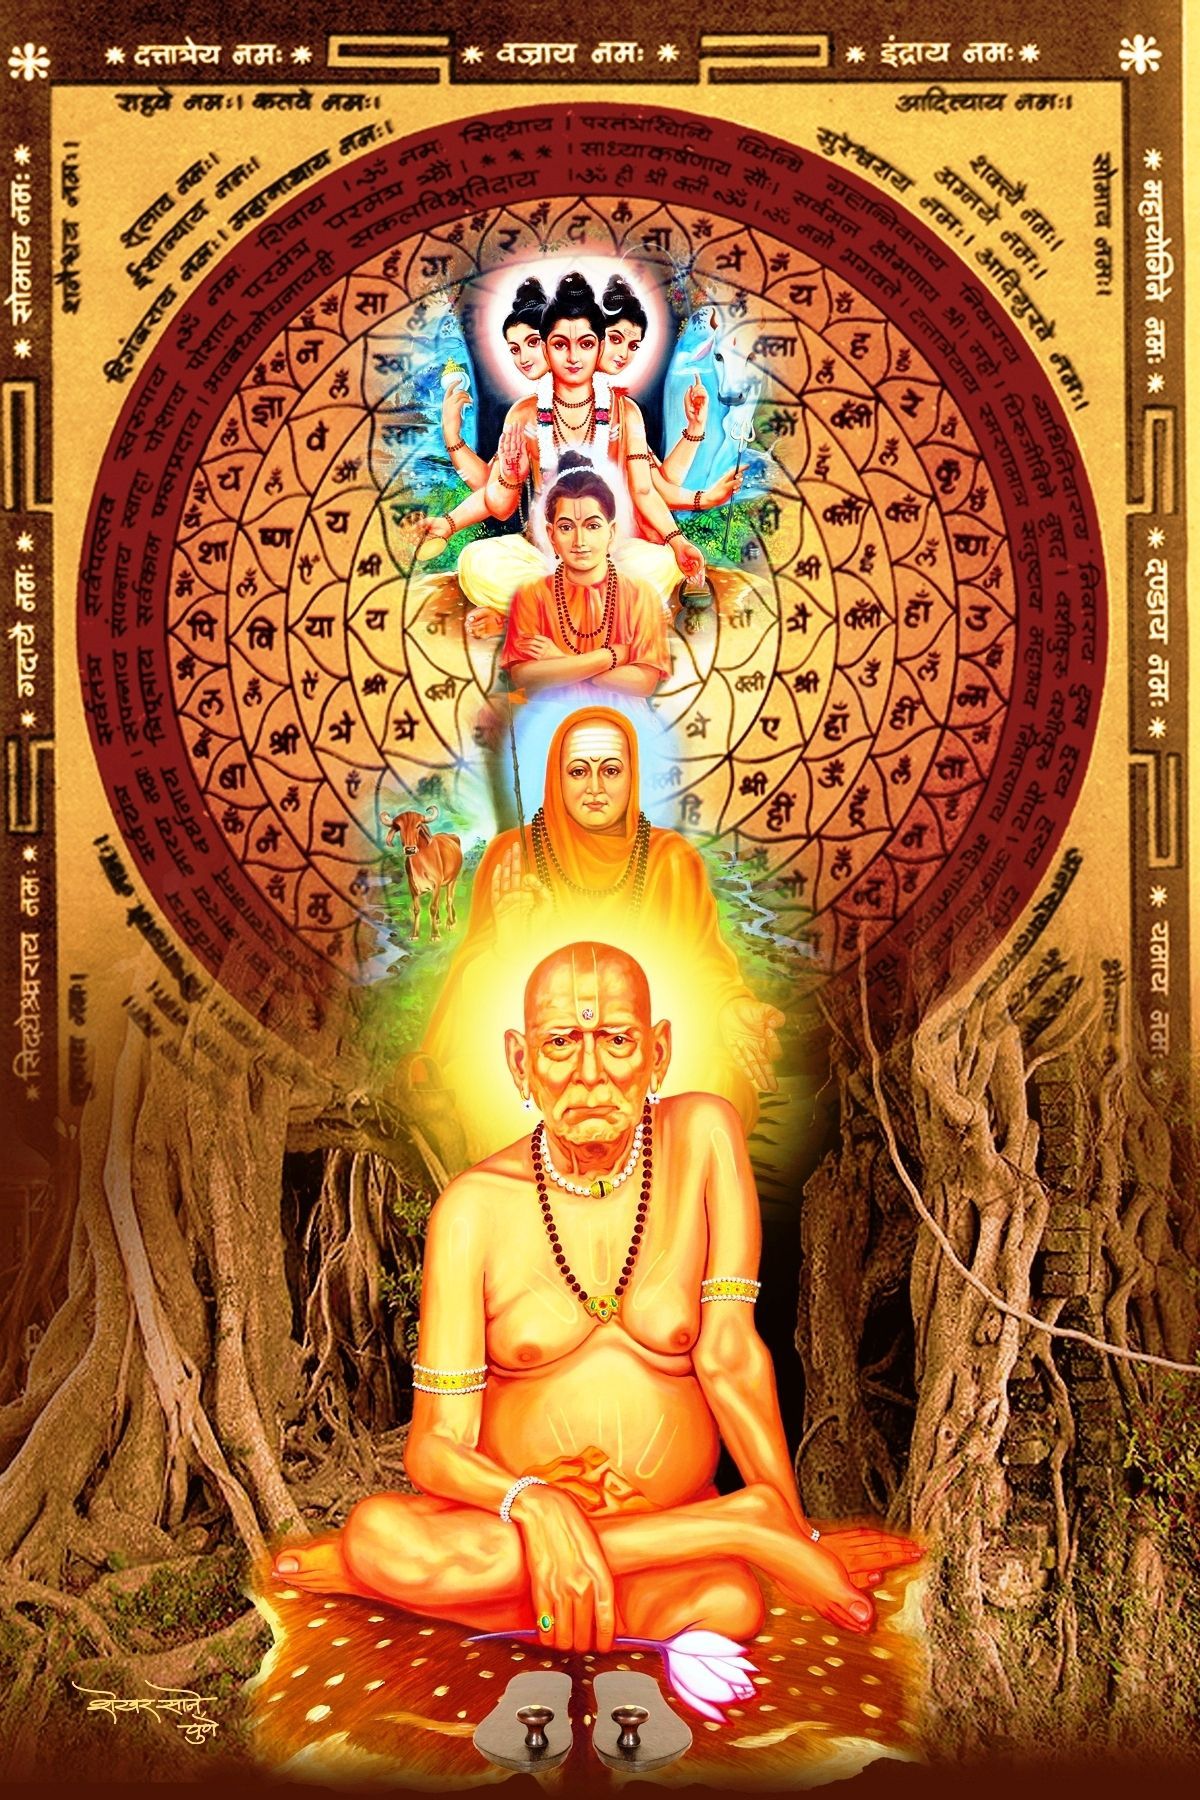 Shri Swami Samarth Wallpaper Free Shri Swami Samarth